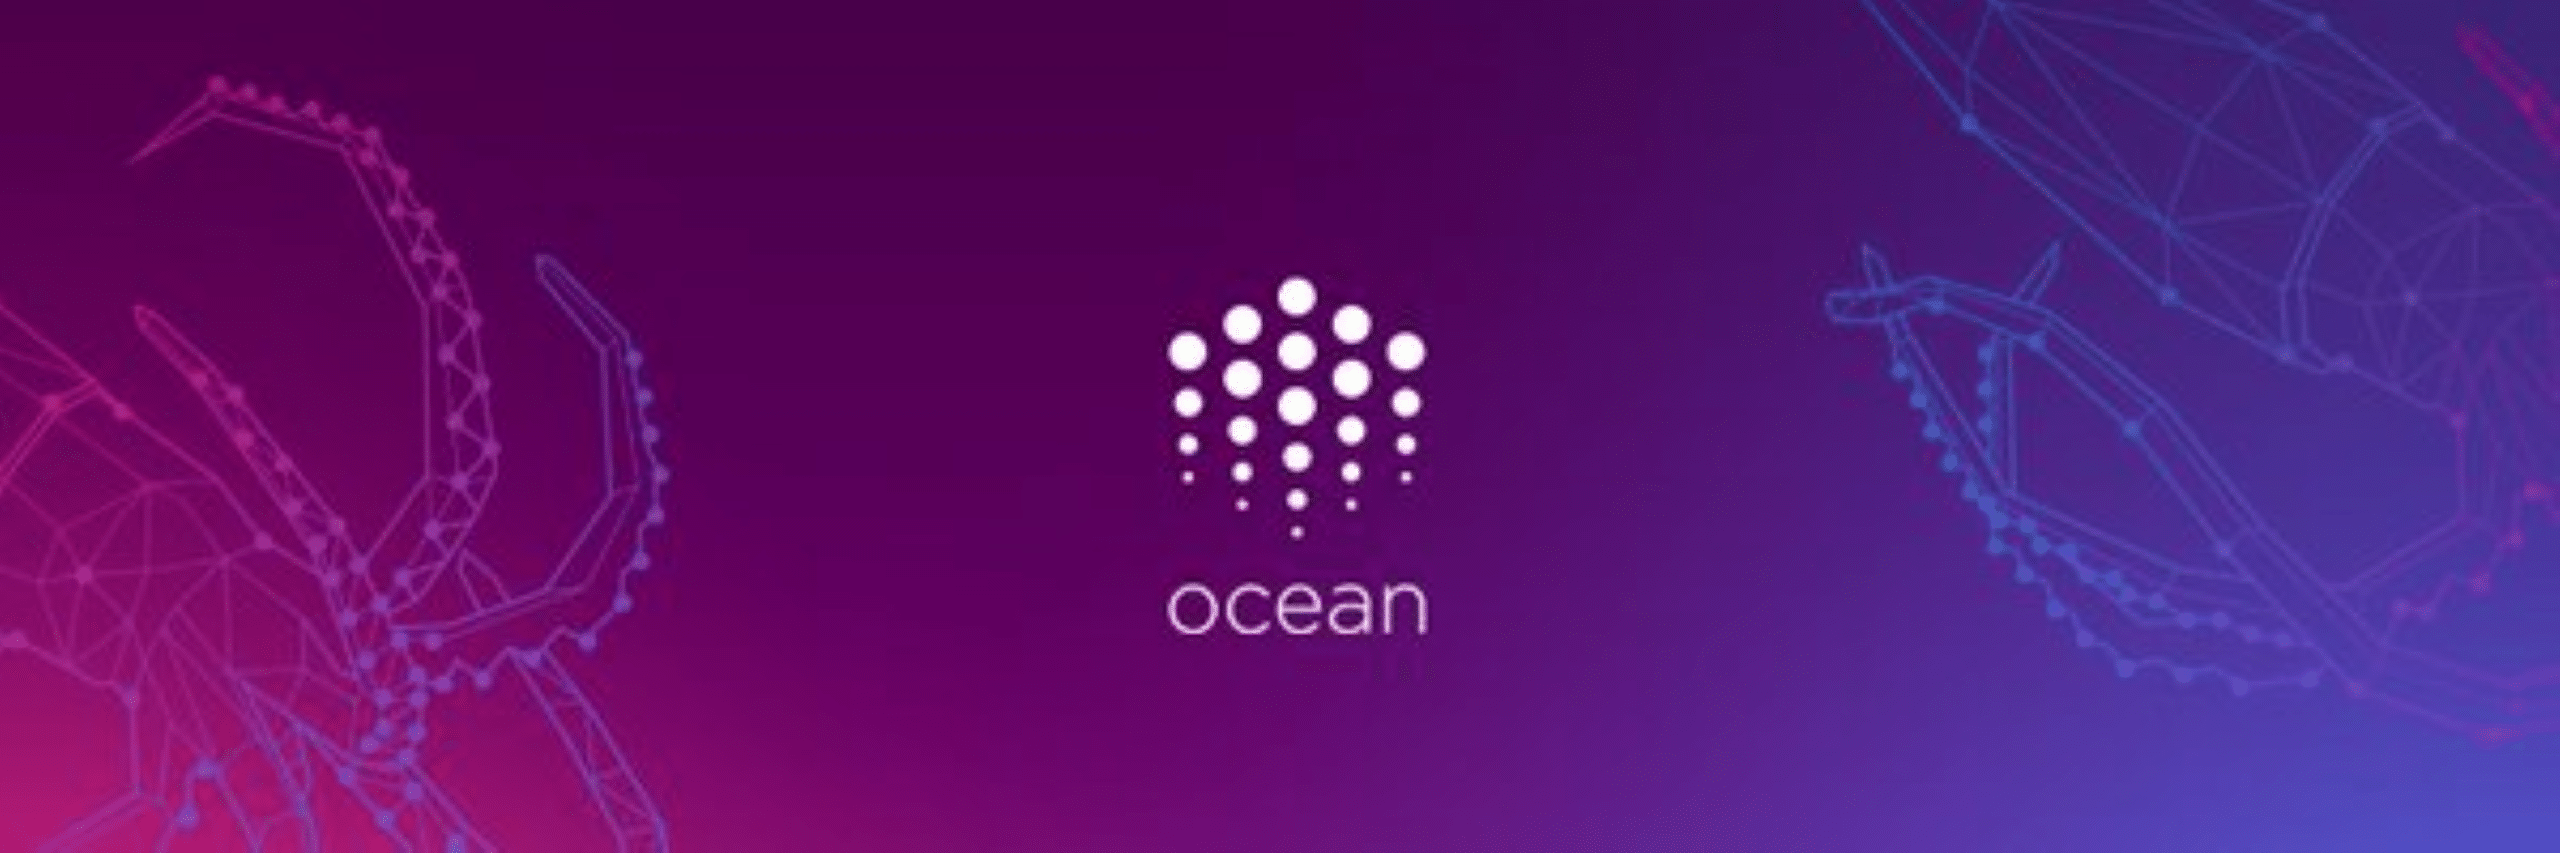 OCEAN